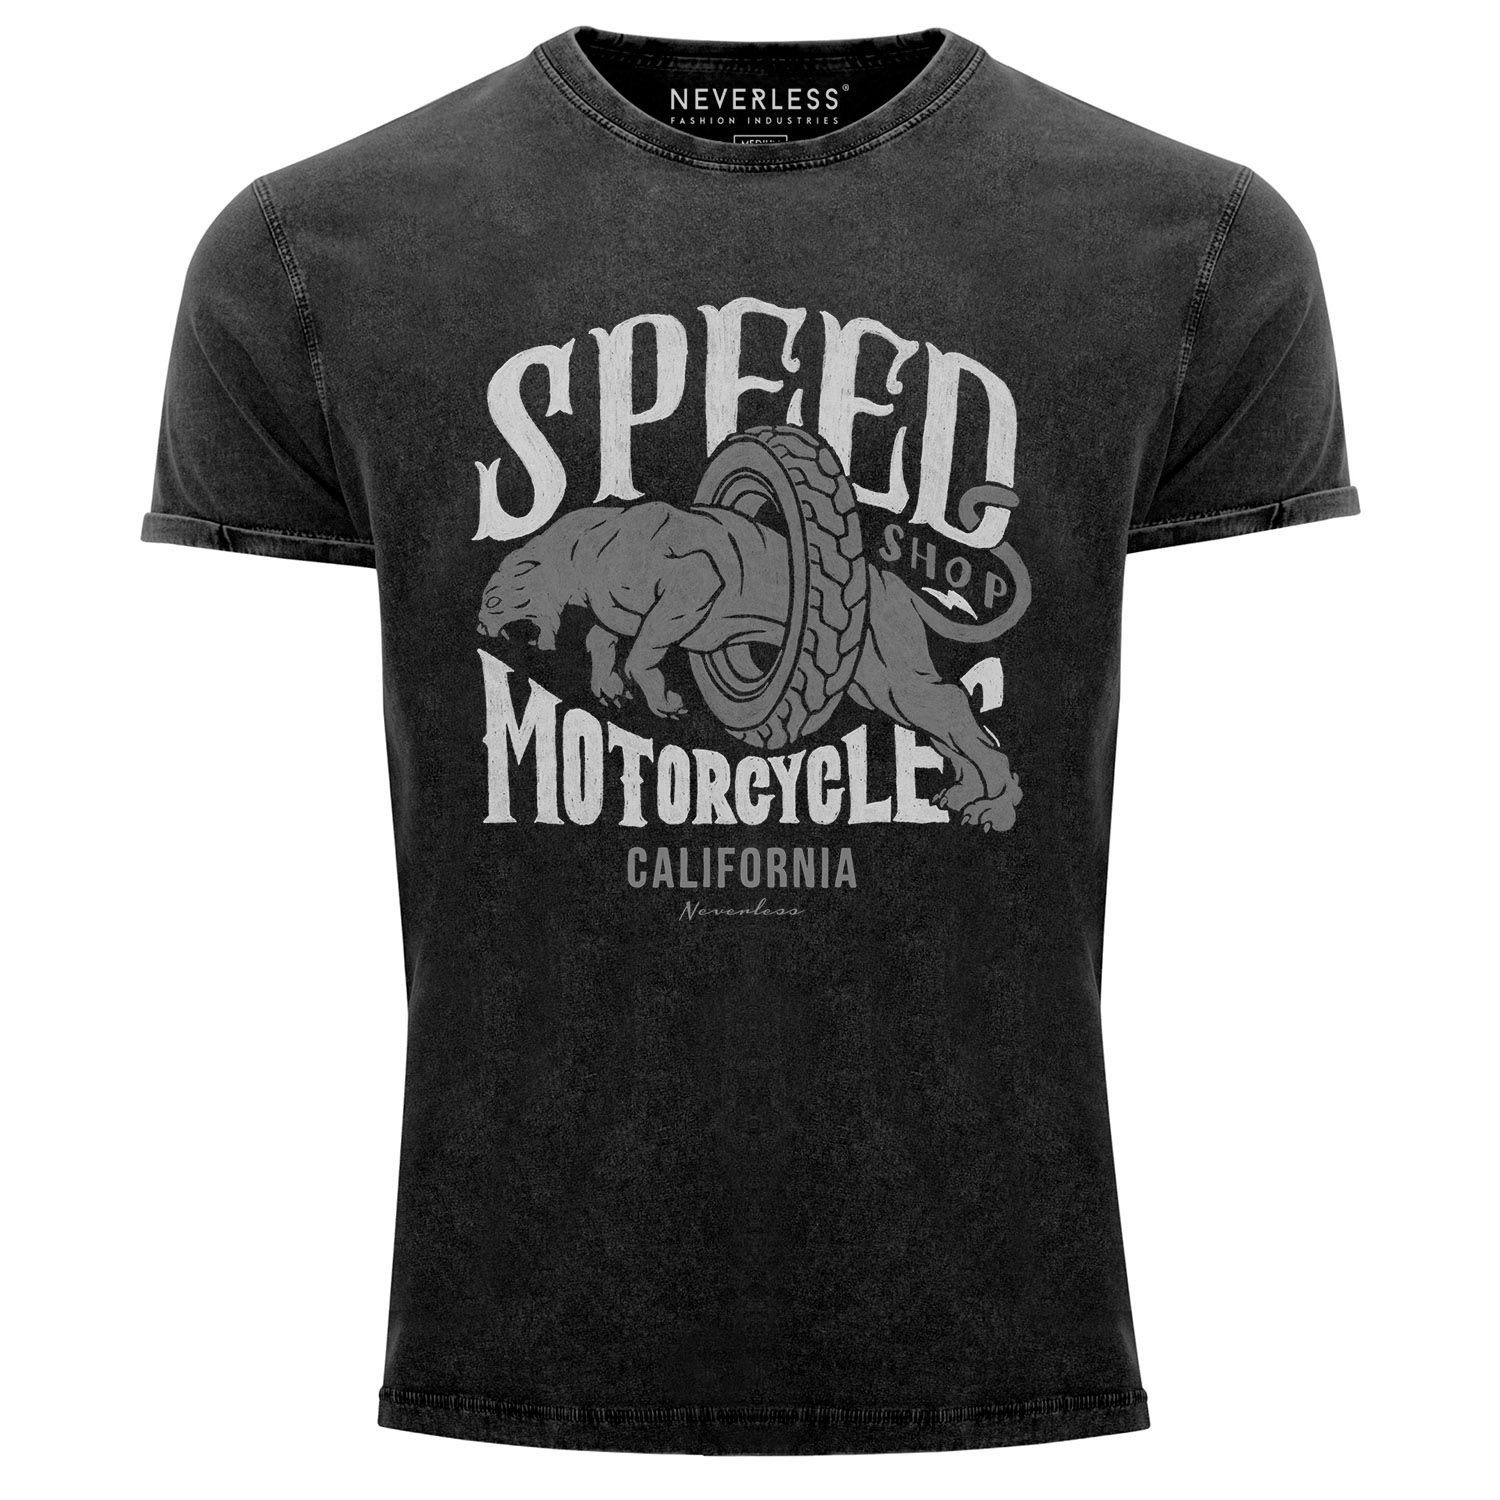 Neverless Print-Shirt Neverless® Herren T-Shirt Vintage Shirt Printshirt Motorrad Motorcycle Speed Shop Aufdruck Used Look Slim Fit mit Print